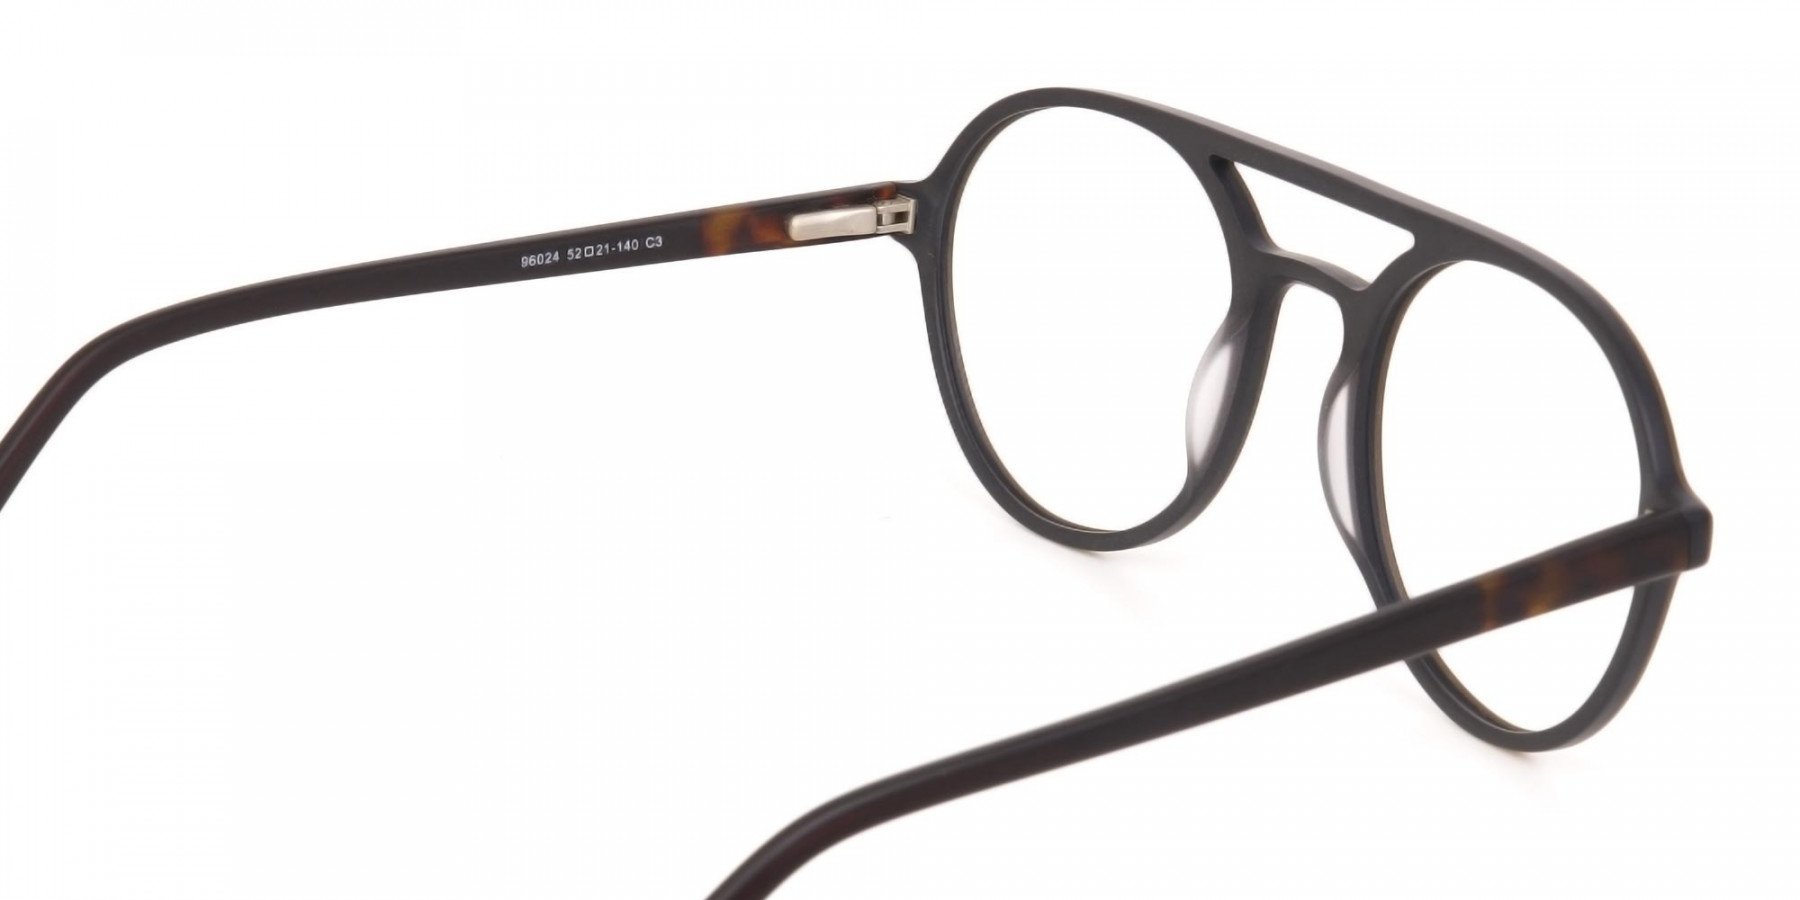 Oak Brown and Tortoise Designer Round Eyeglasses-1